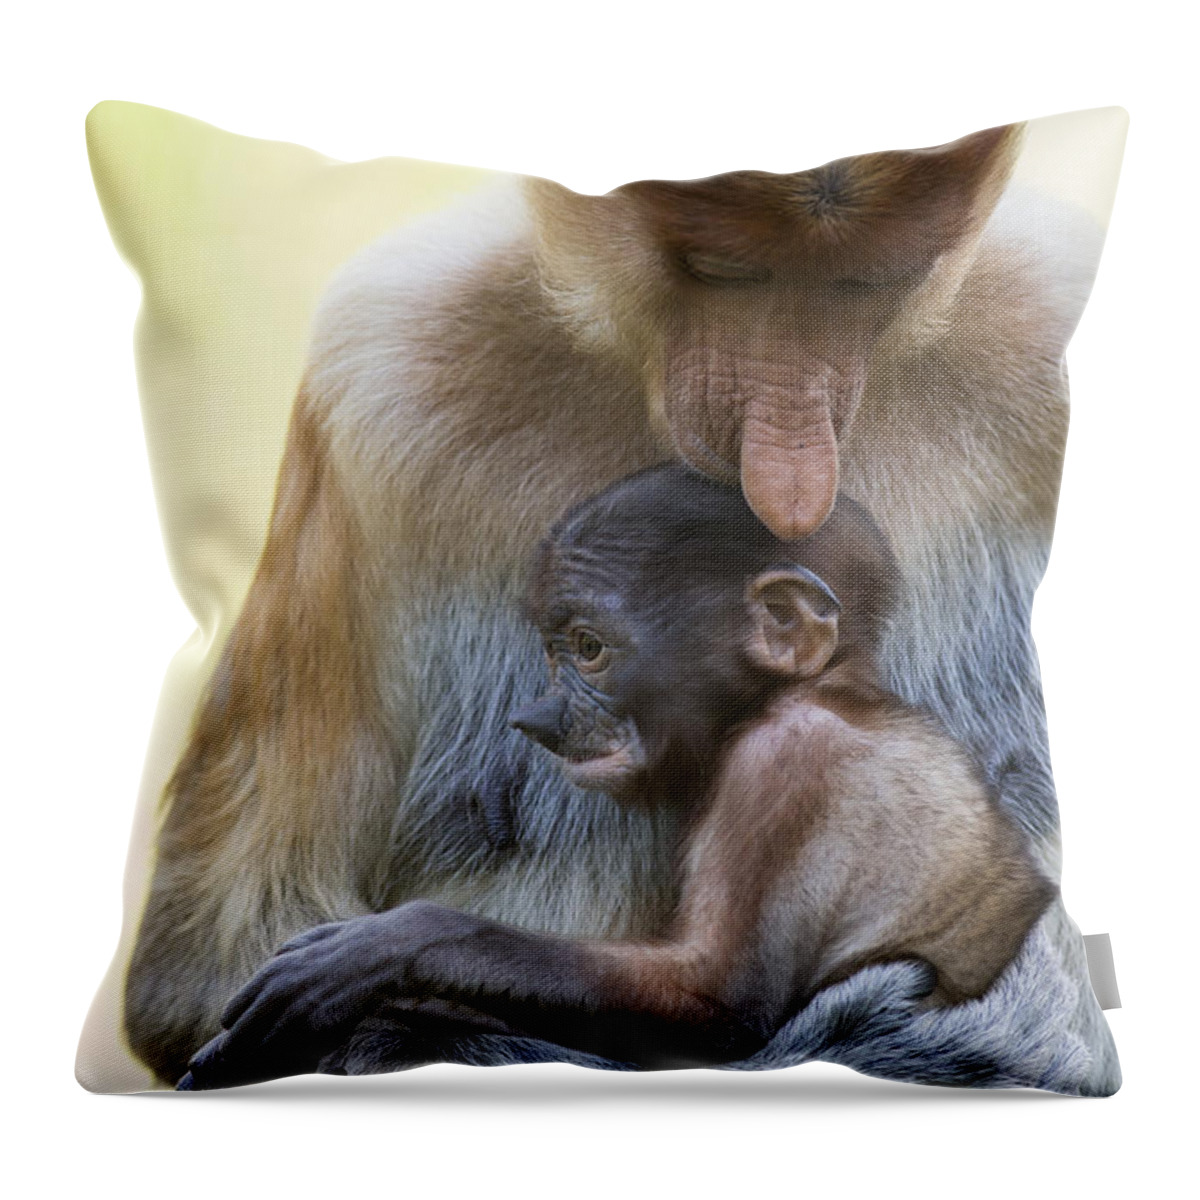 Suzi Eszterhas Throw Pillow featuring the photograph Proboscis Monkey Mother Holding Baby by Suzi Eszterhas